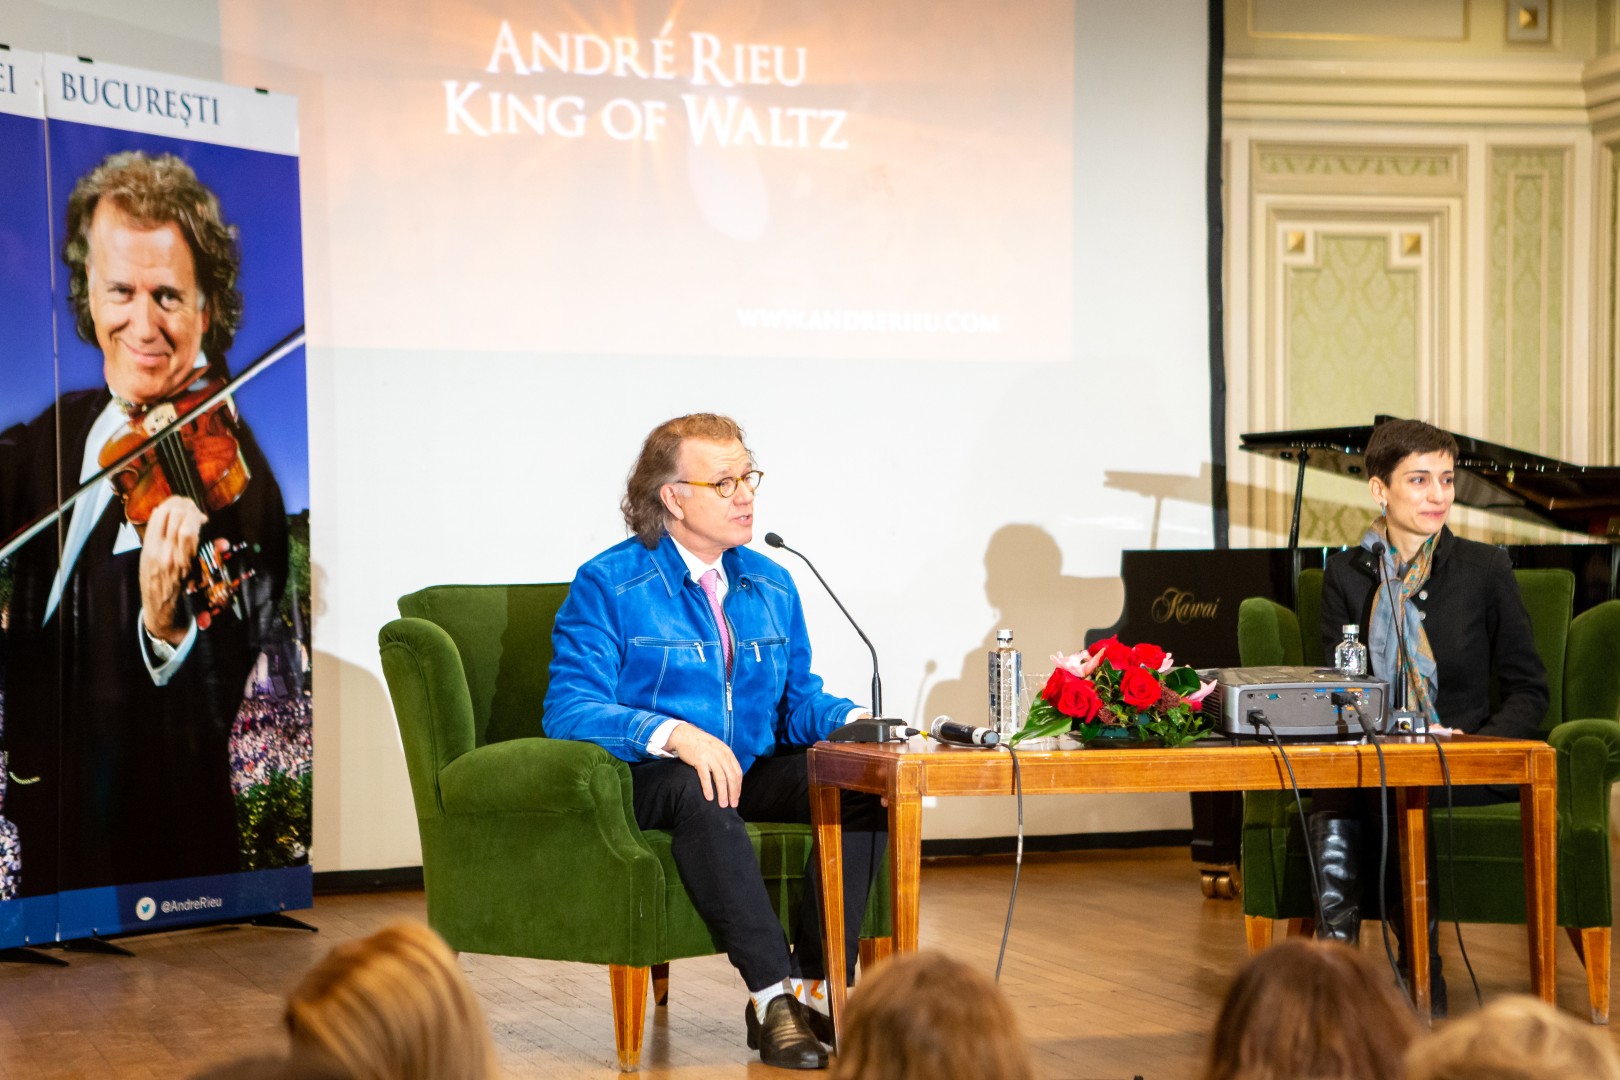 André Rieu at Ateneul Român in Bucharest on December 9, 2014 (2c47e4b4fb)